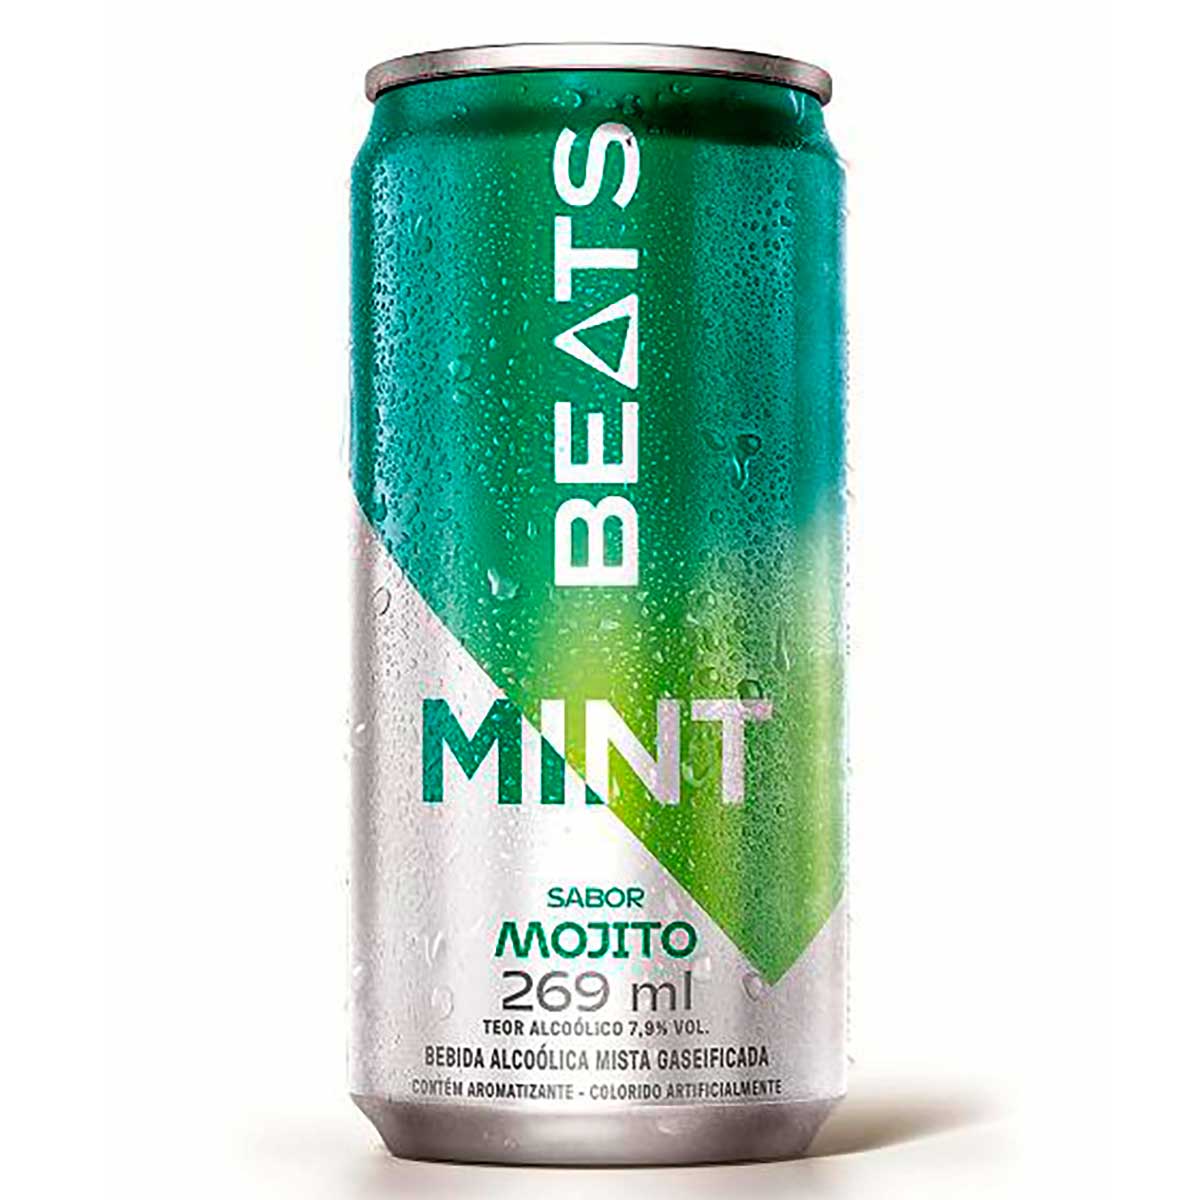 drink-pronto-beats-drinks-mint-sabor-mojito-269ml-lata-1.jpg